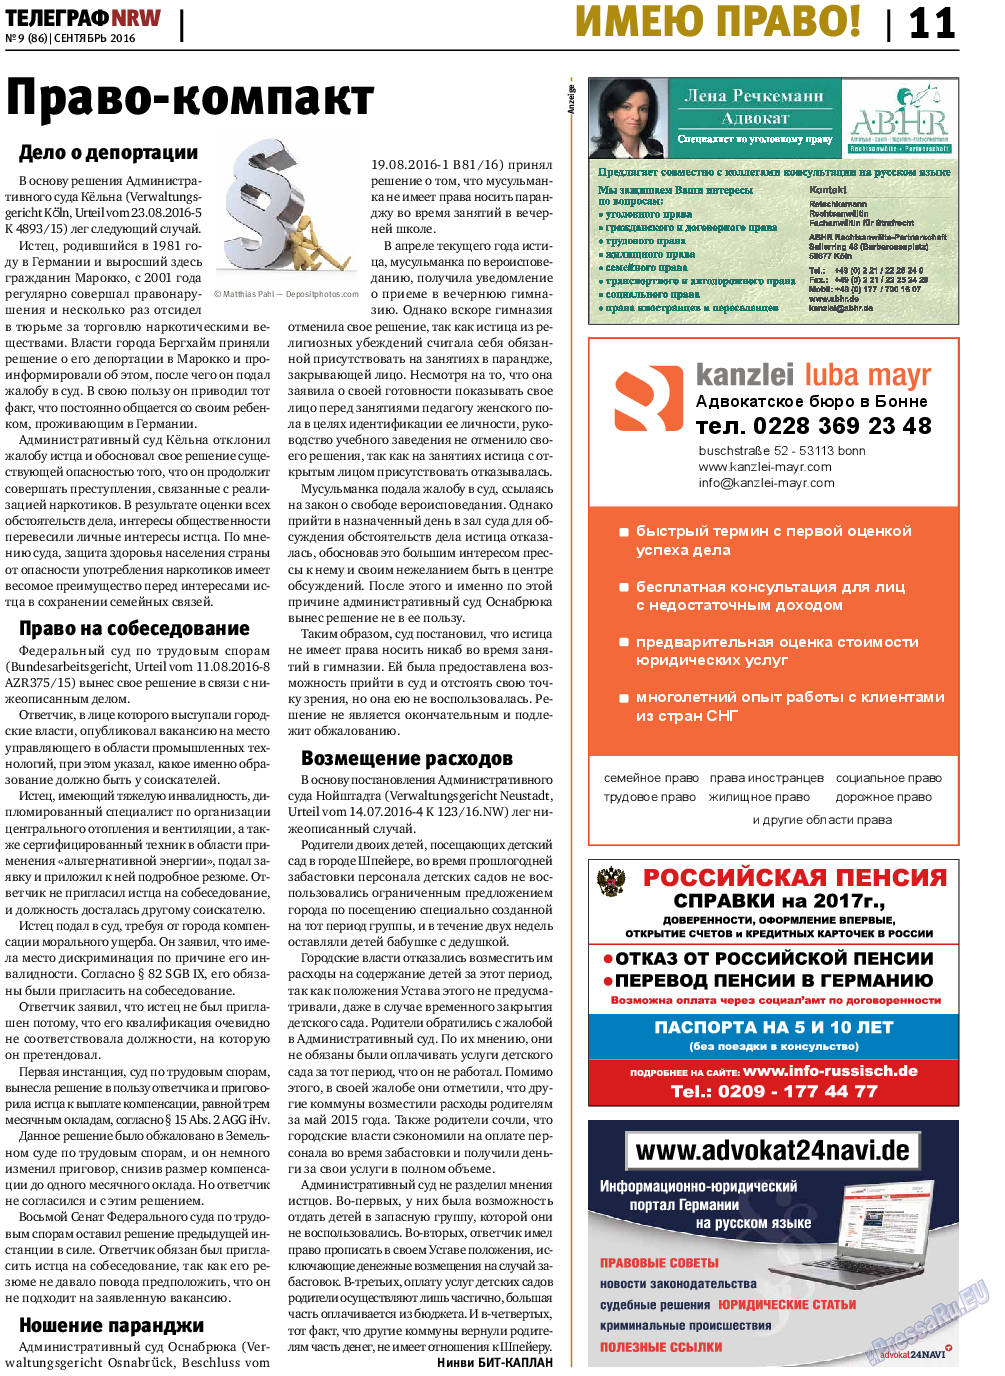 Телеграф NRW, газета. 2016 №9 стр.11